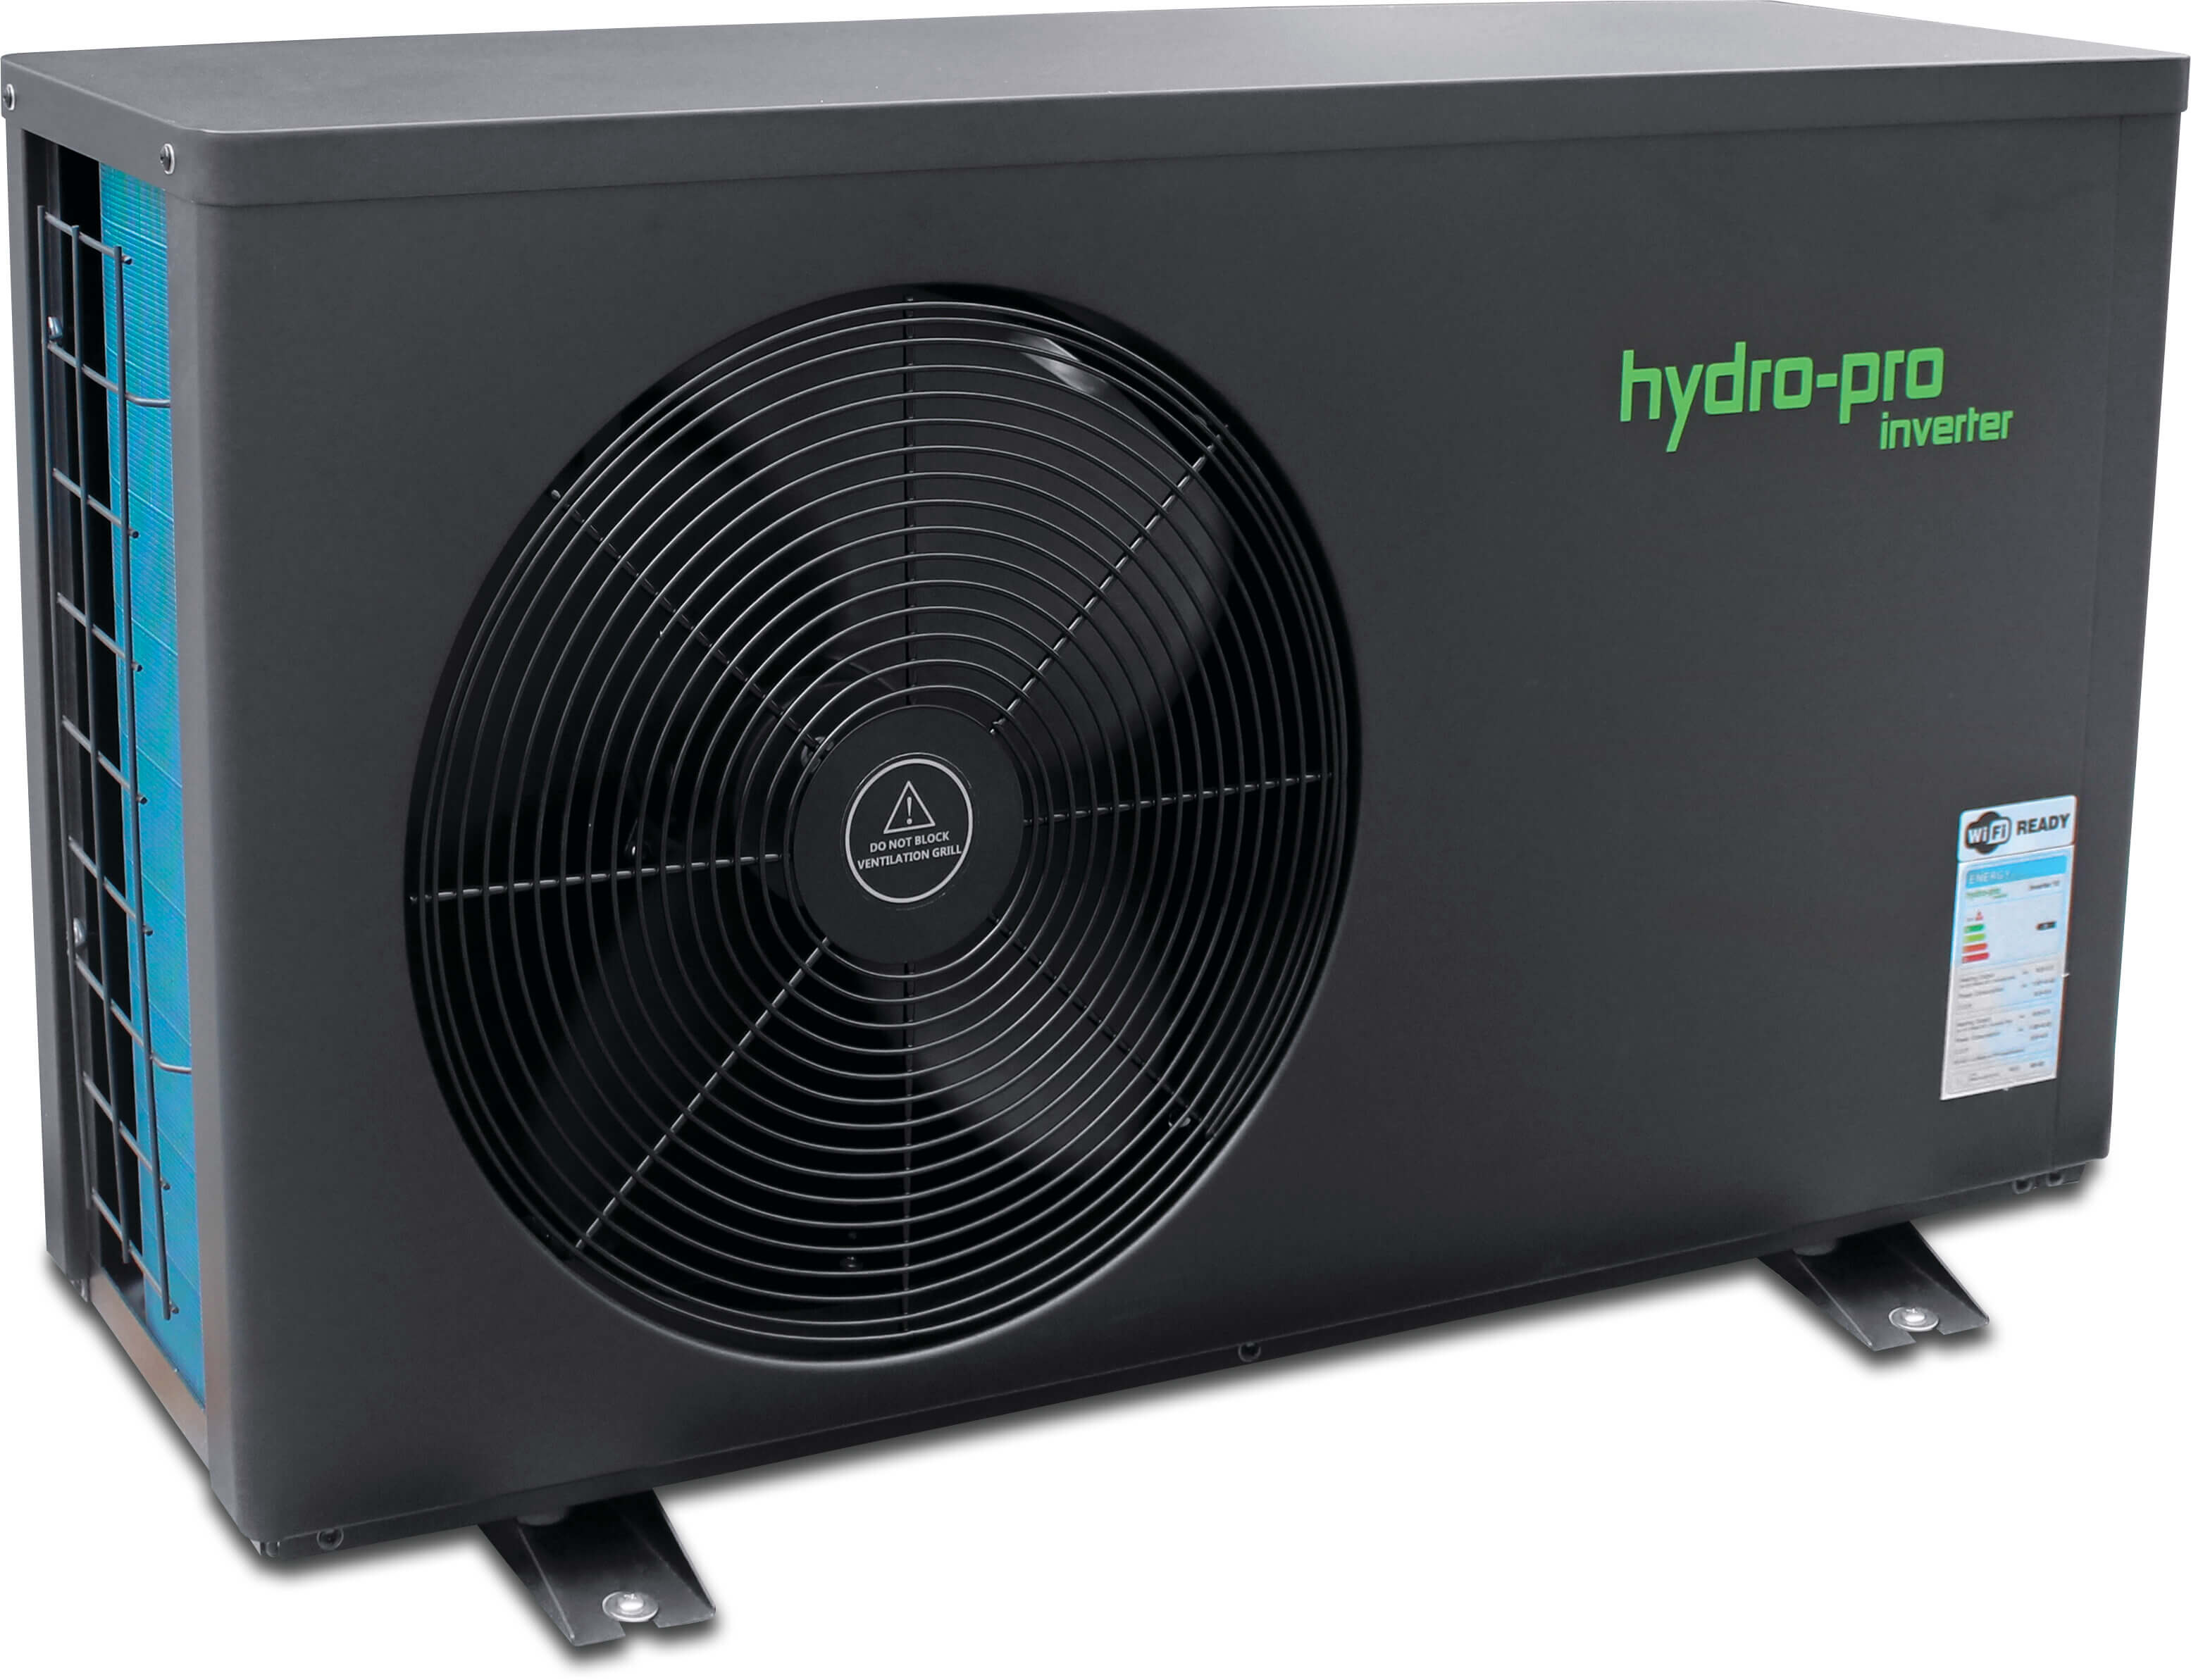 Hydro-Pro Heat pump Inverter E steel 4.4A 230VAC type 5 horizontal